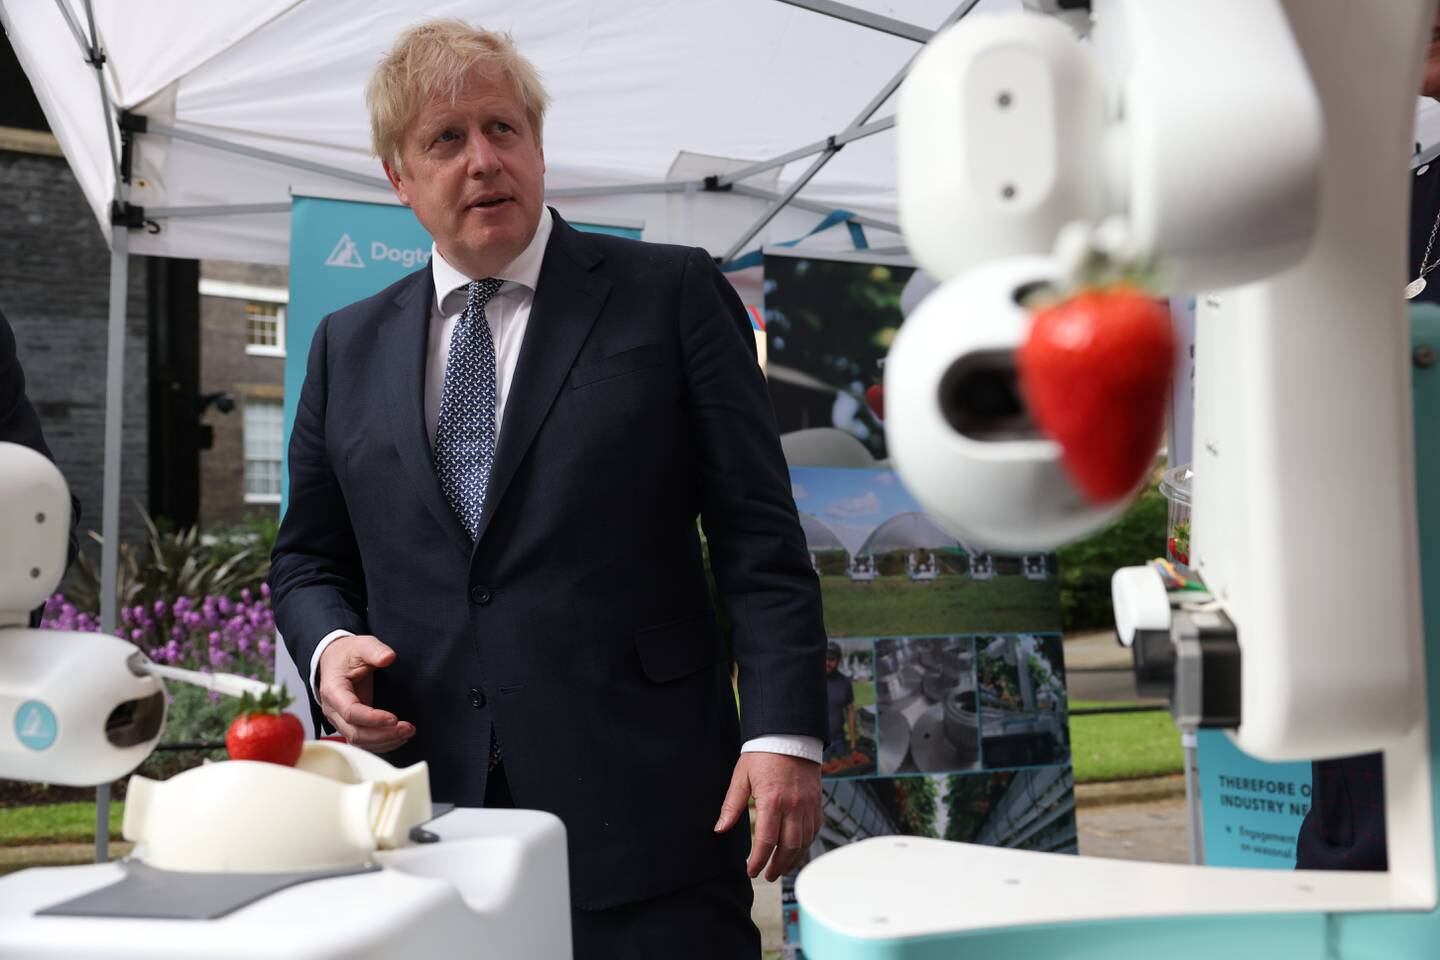 Boris Johnson visits a robotic fruit picker stall at a street market in Downing Street, London, on Monday. EPA